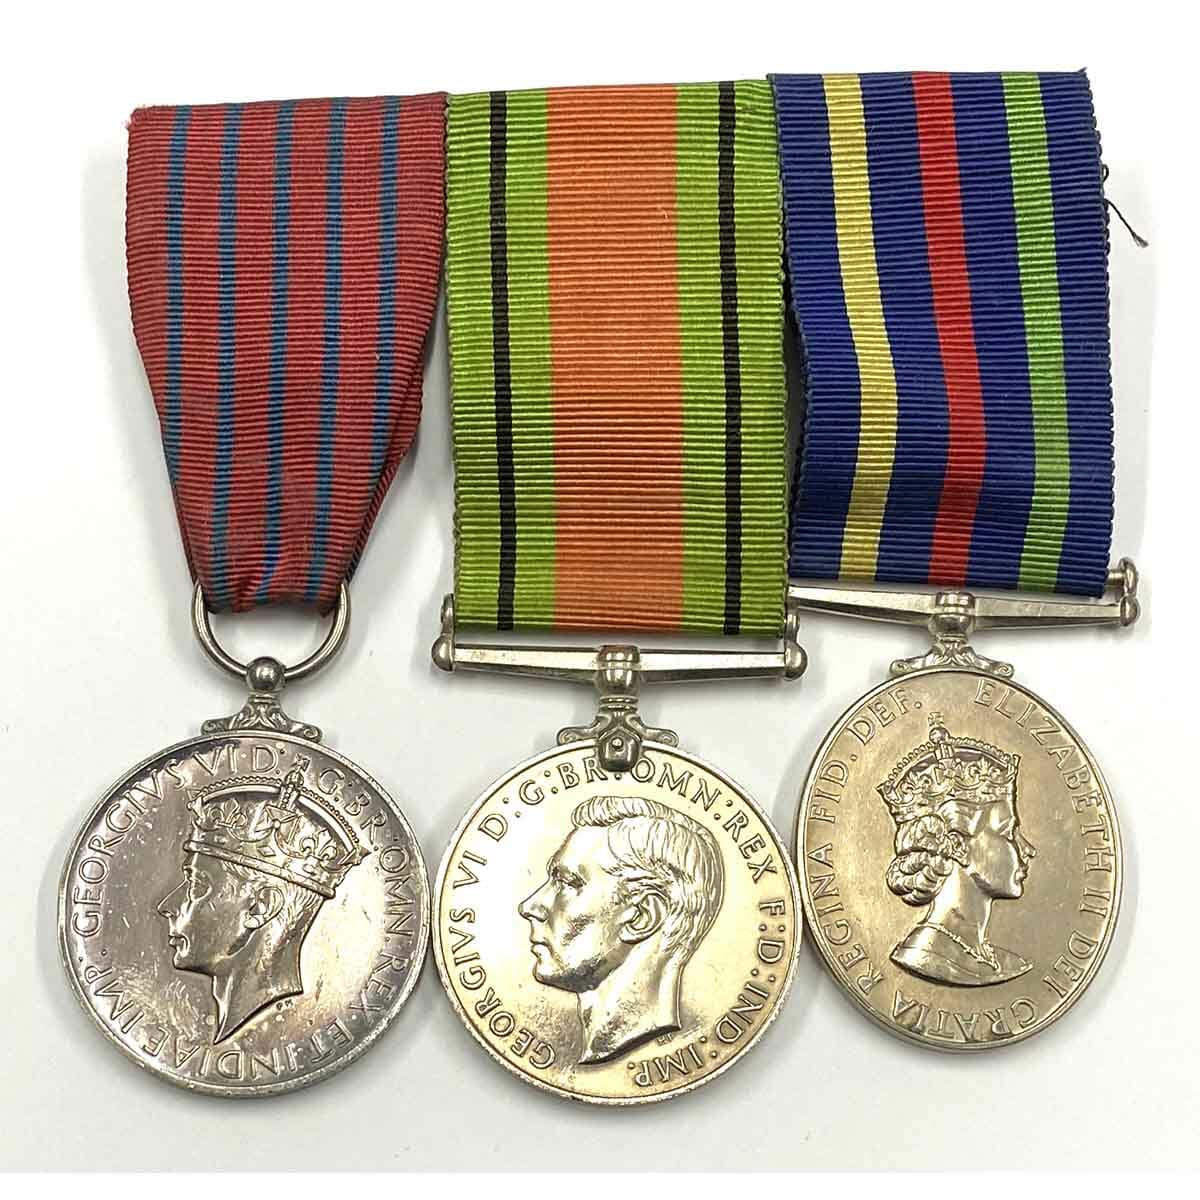 George Medal, Manchester Blitz 2